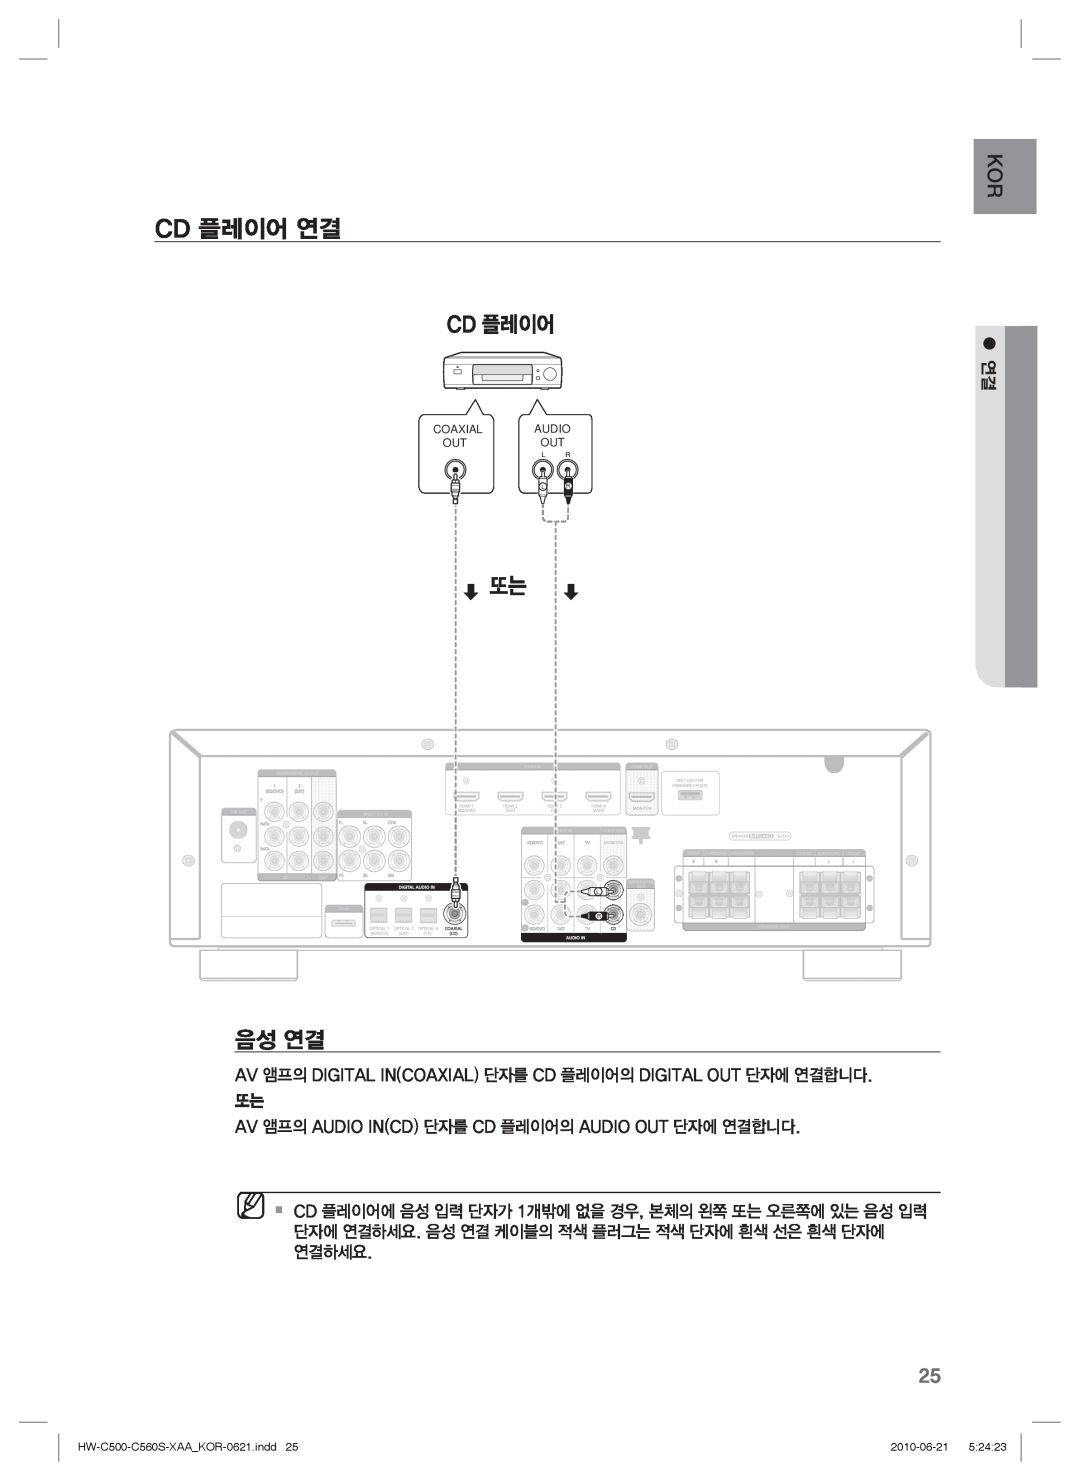 Samsung manual Cd 플레이어 연결, 음성 연결, HW-C500-C560S-XAA KOR-0621.indd25, 2010-06-21 5, iPod 